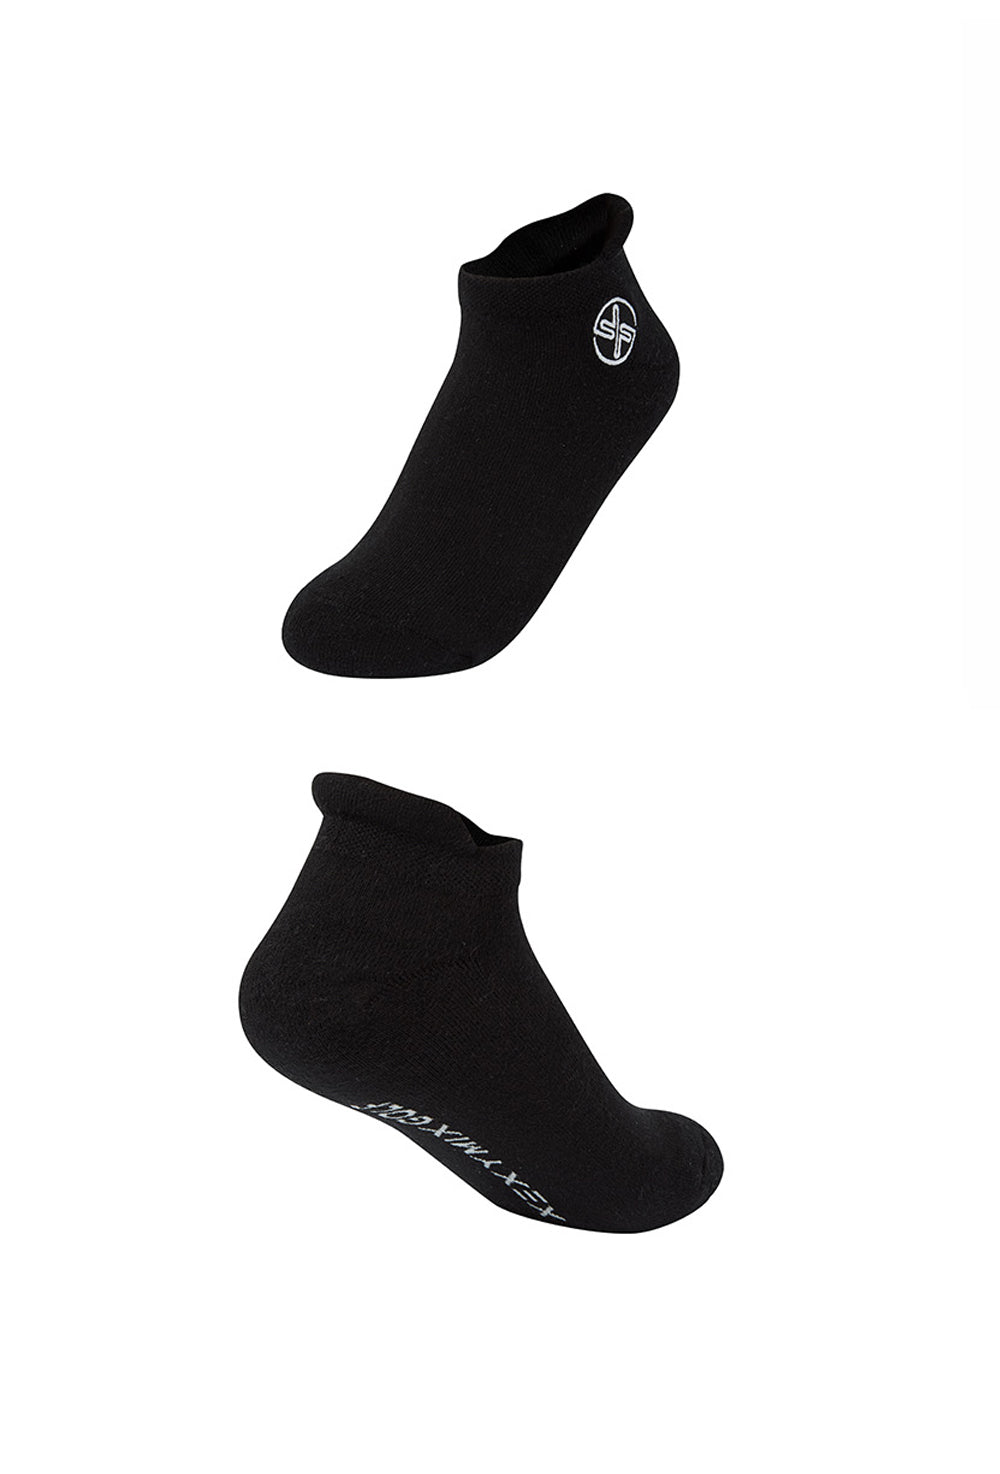 XEXYMIX Cushioning Ankle Socks - Black